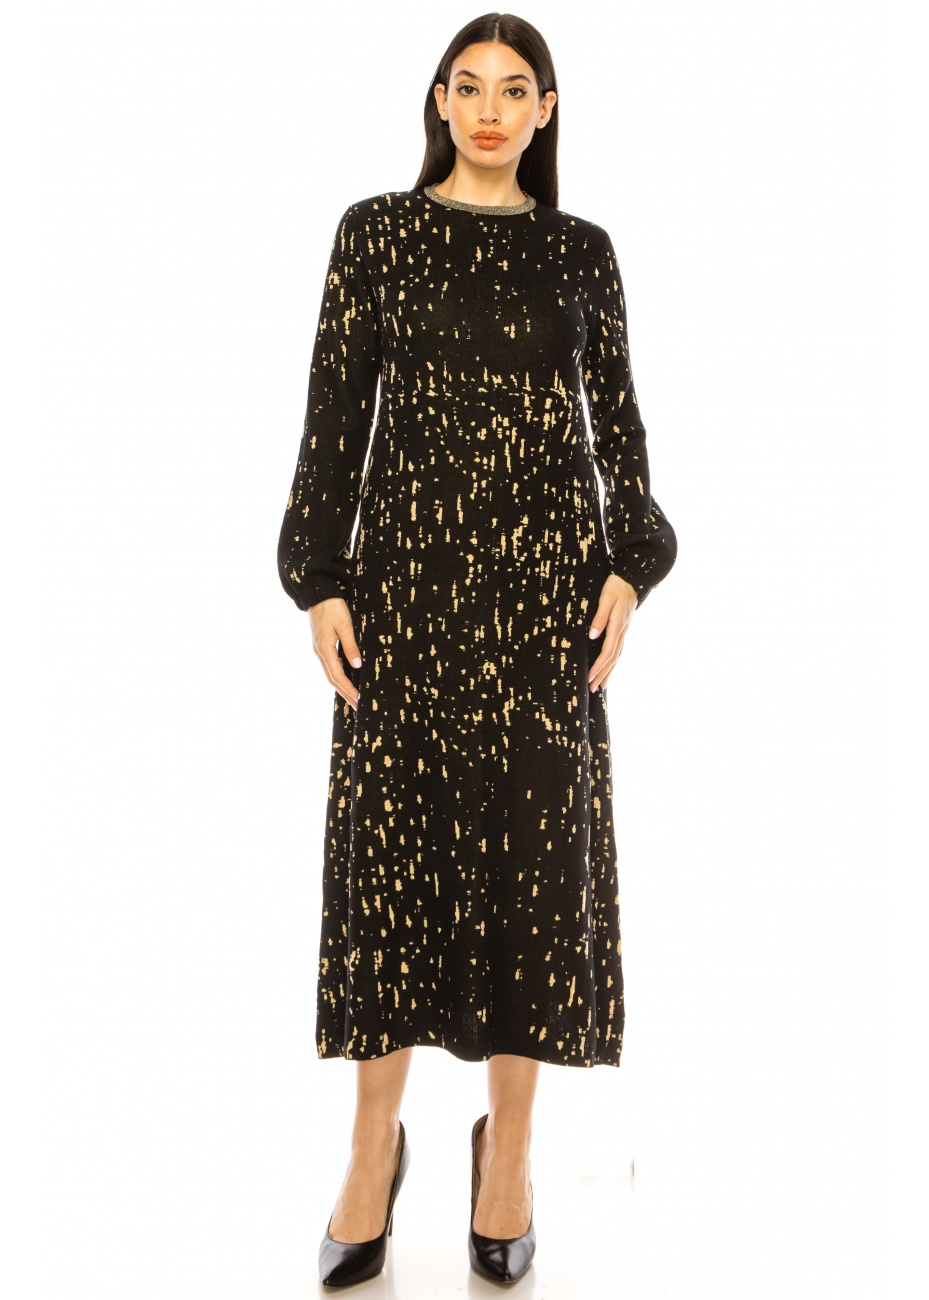 Black Knit Dress with Elegant Print Design